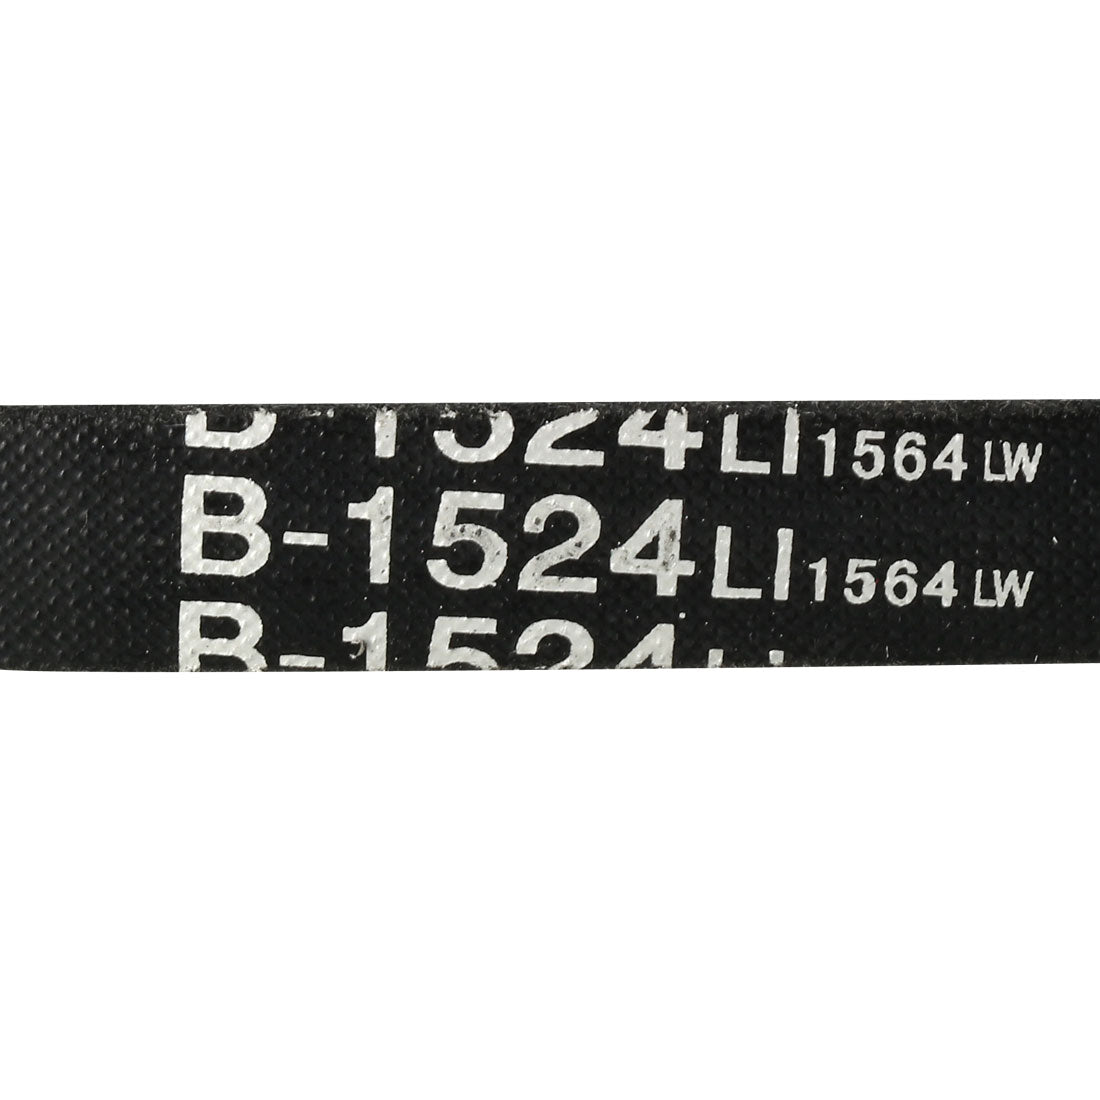 uxcell Uxcell B-1524/B60 Drive V-Belt Inner Girth 60-inch Industrial Rubber Transmission Belt